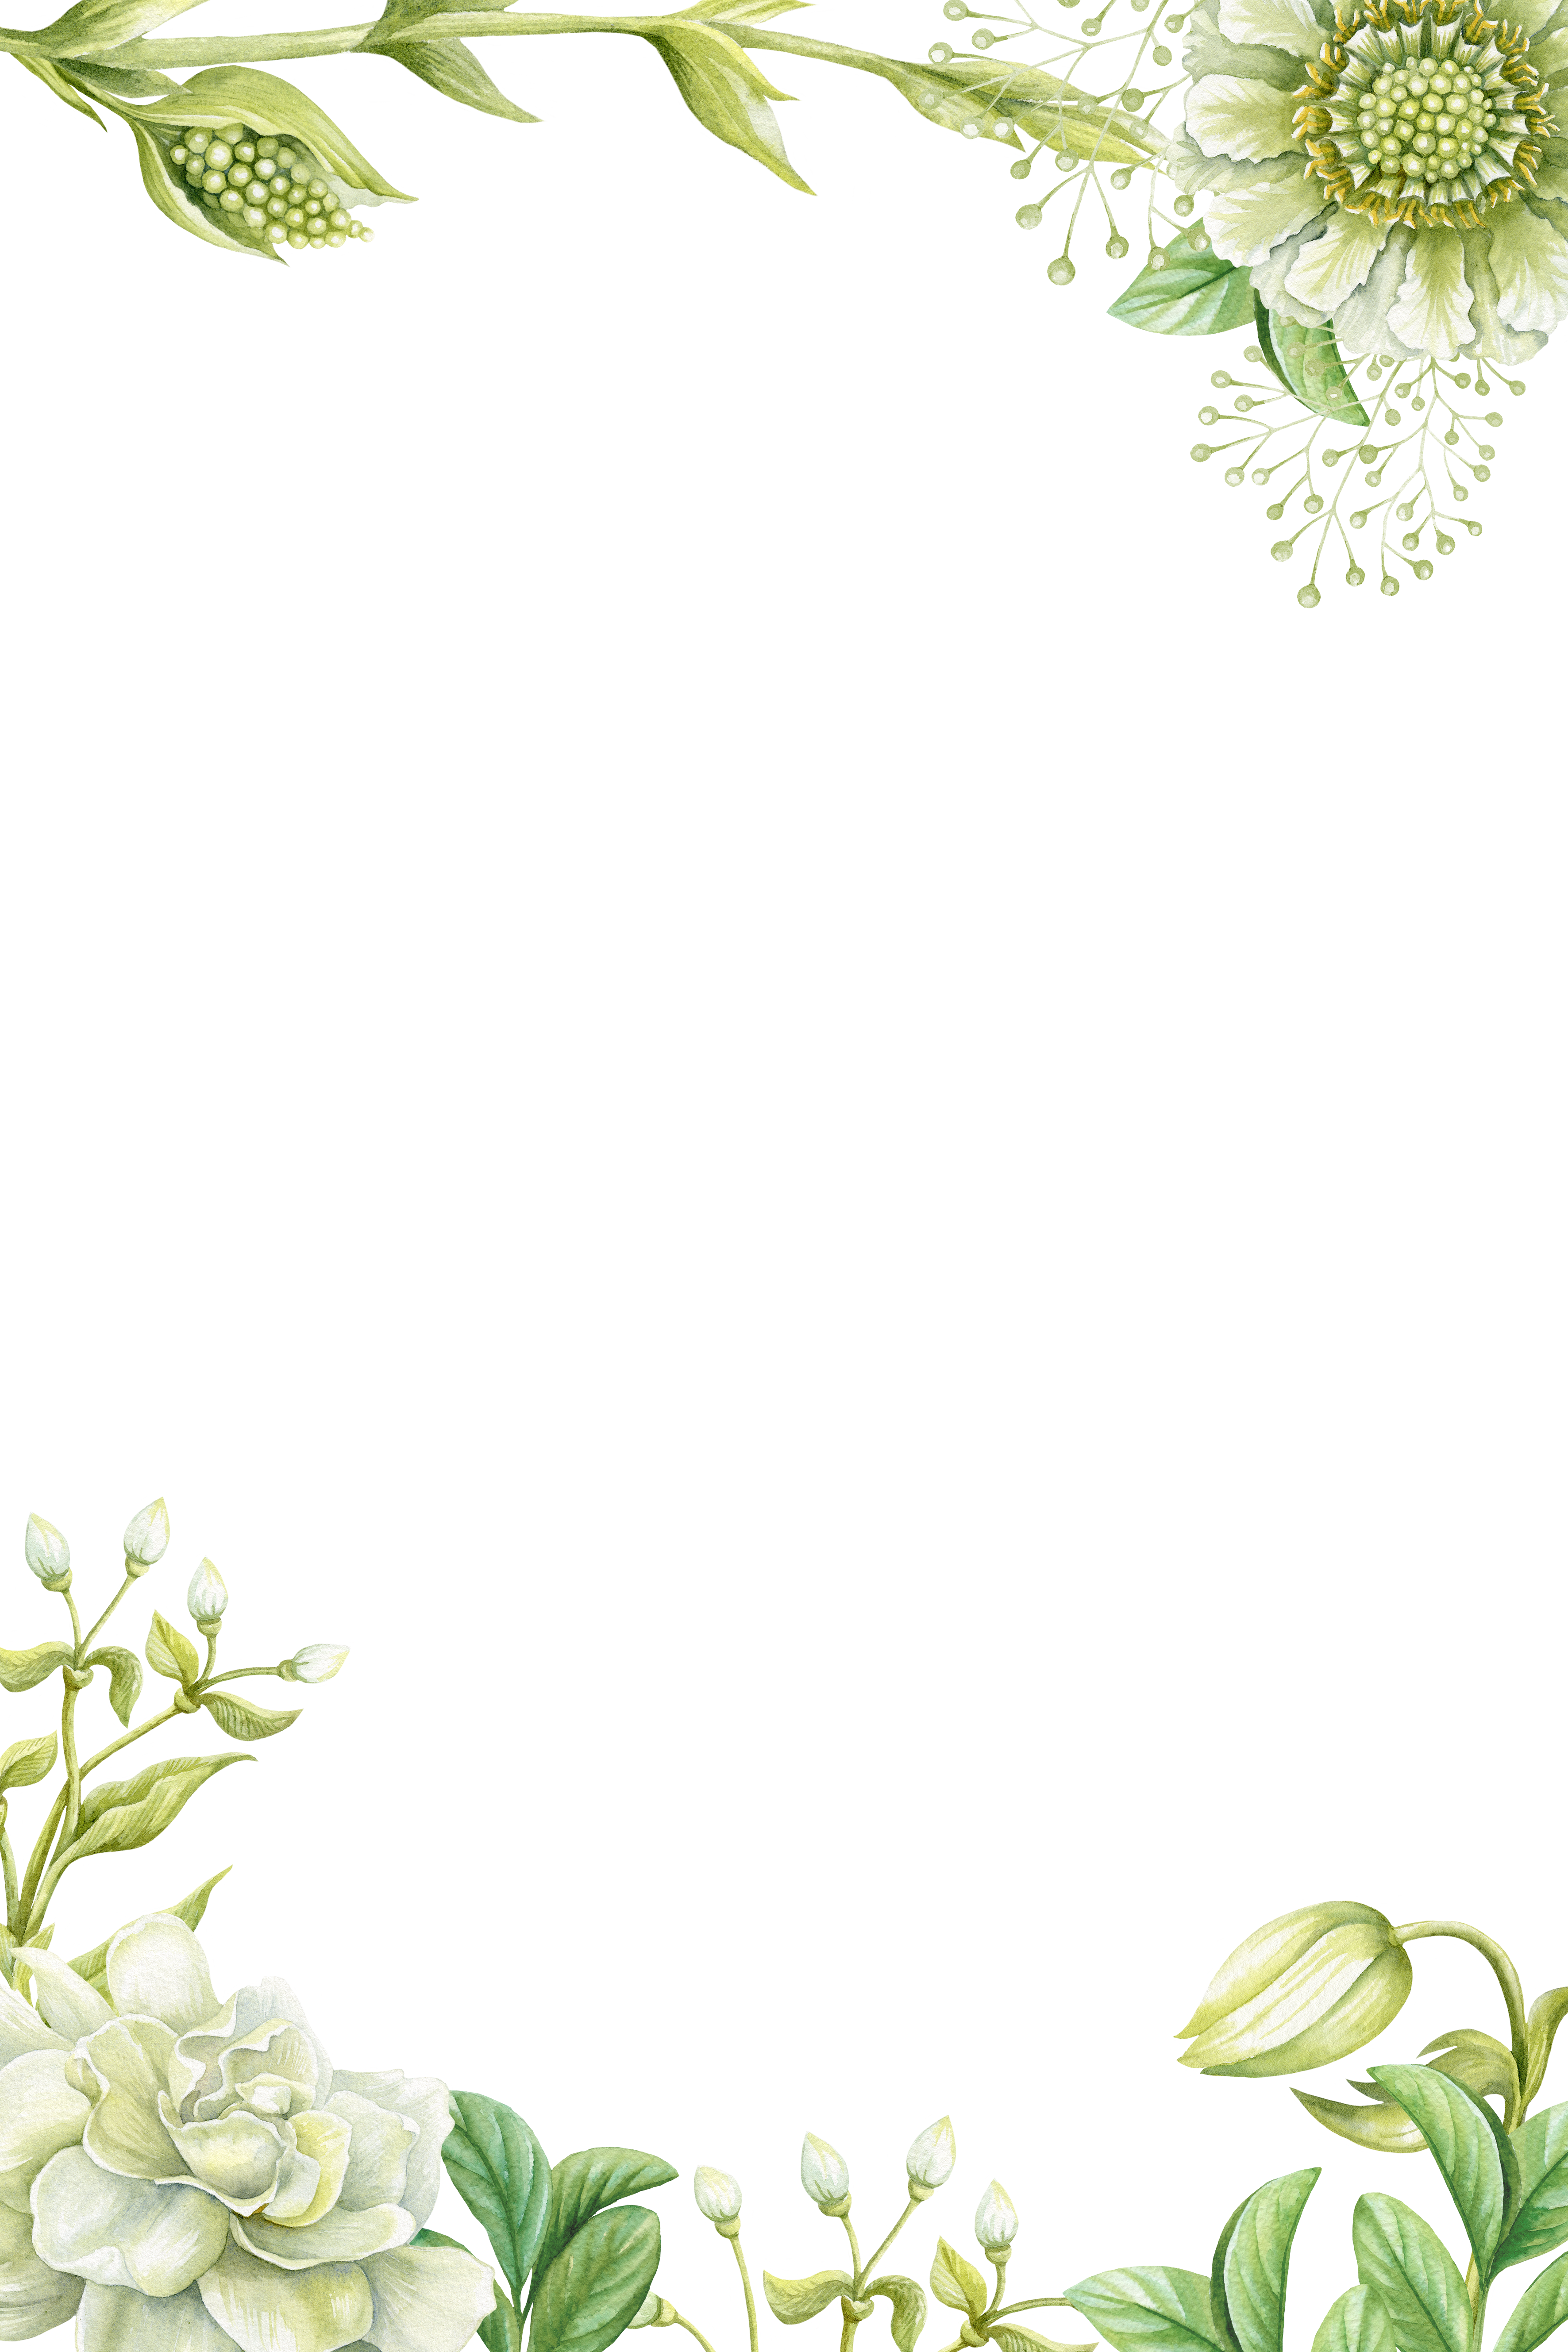 Green Hand-painted Flower Borders 3543*5315 Transprent - Green Flower Border Png (3543x5315)